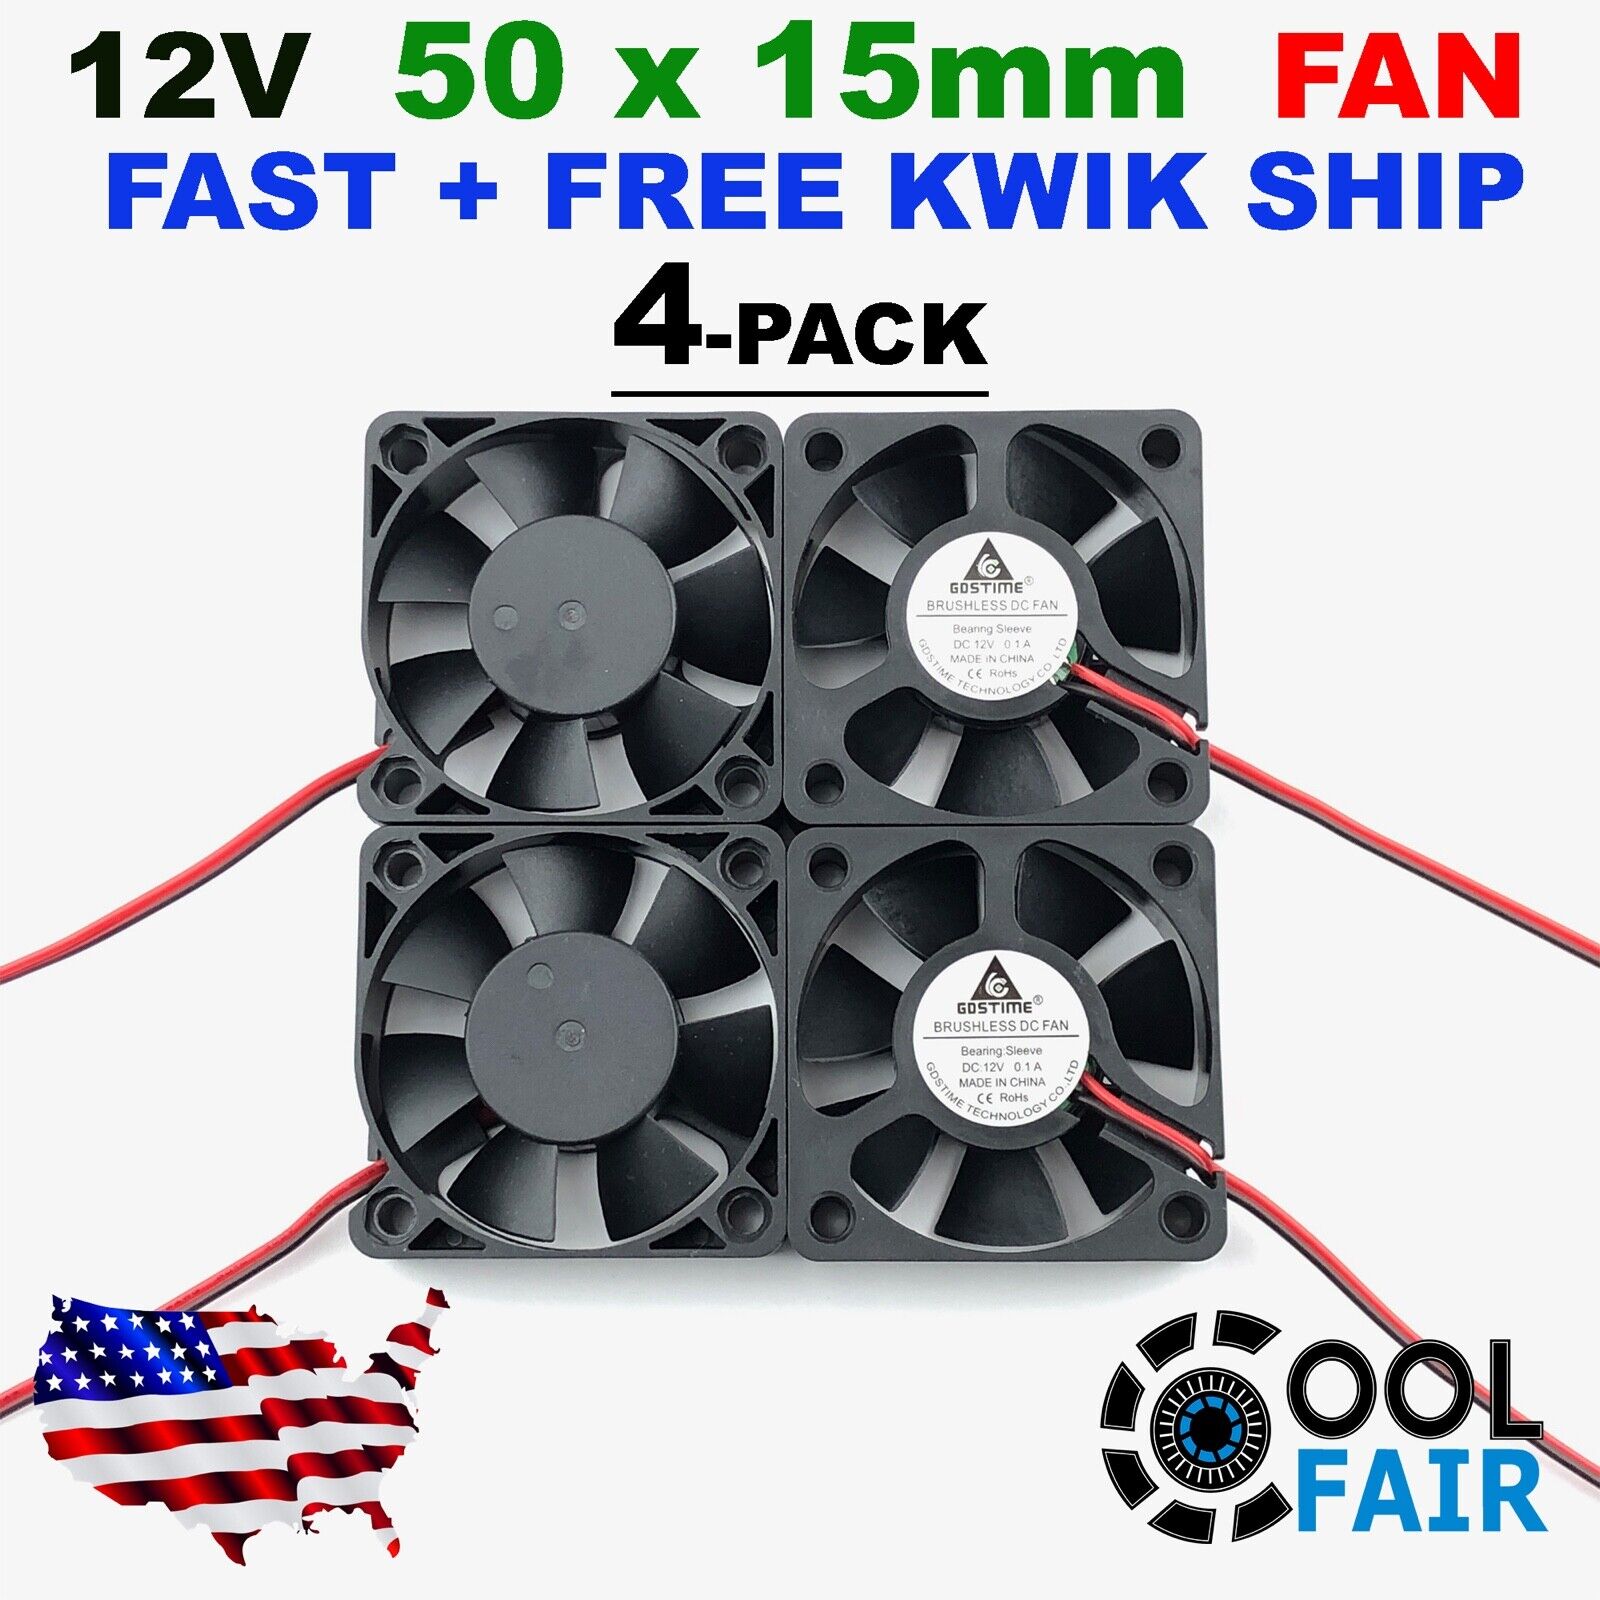 Gdstime 12v 50mm x 15mm Cooling Fan Brushless Axial 5015 50x50x15mm 2Pin 4Pcs